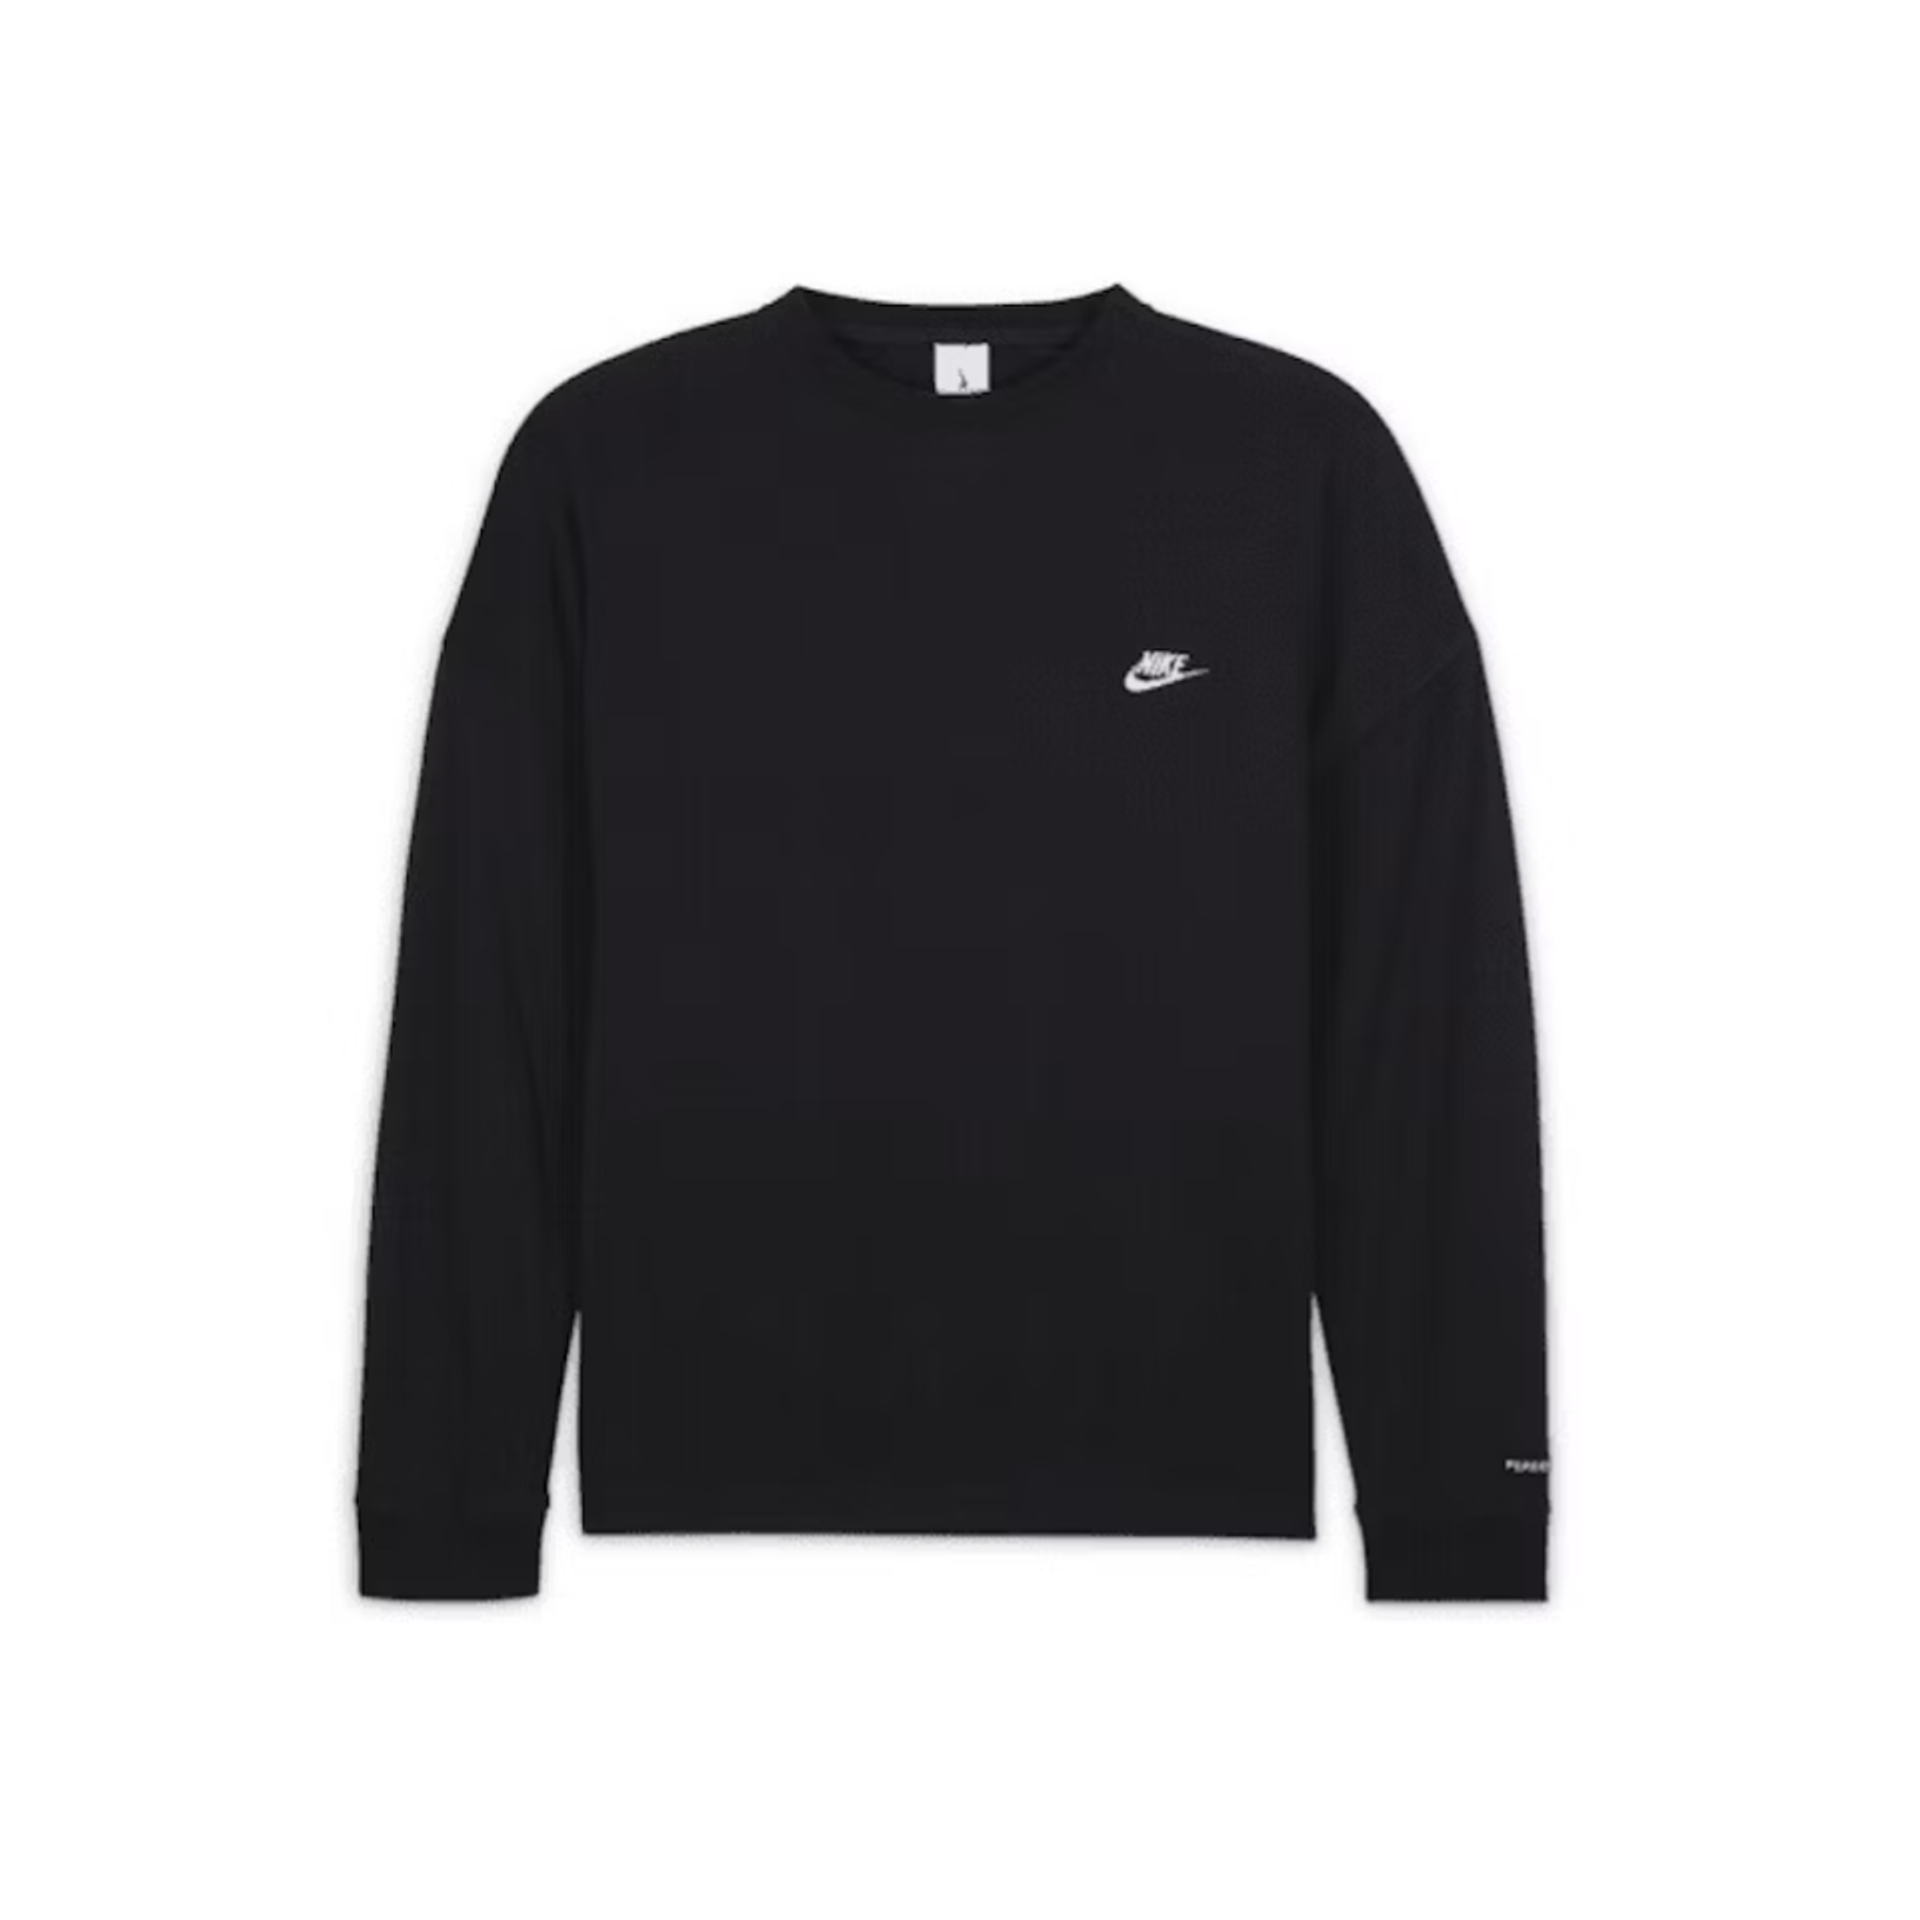 Nike x PEACEMINUSONE G-Dragon Long Sleeve T-shirt 'Black' (Asia Sizing)